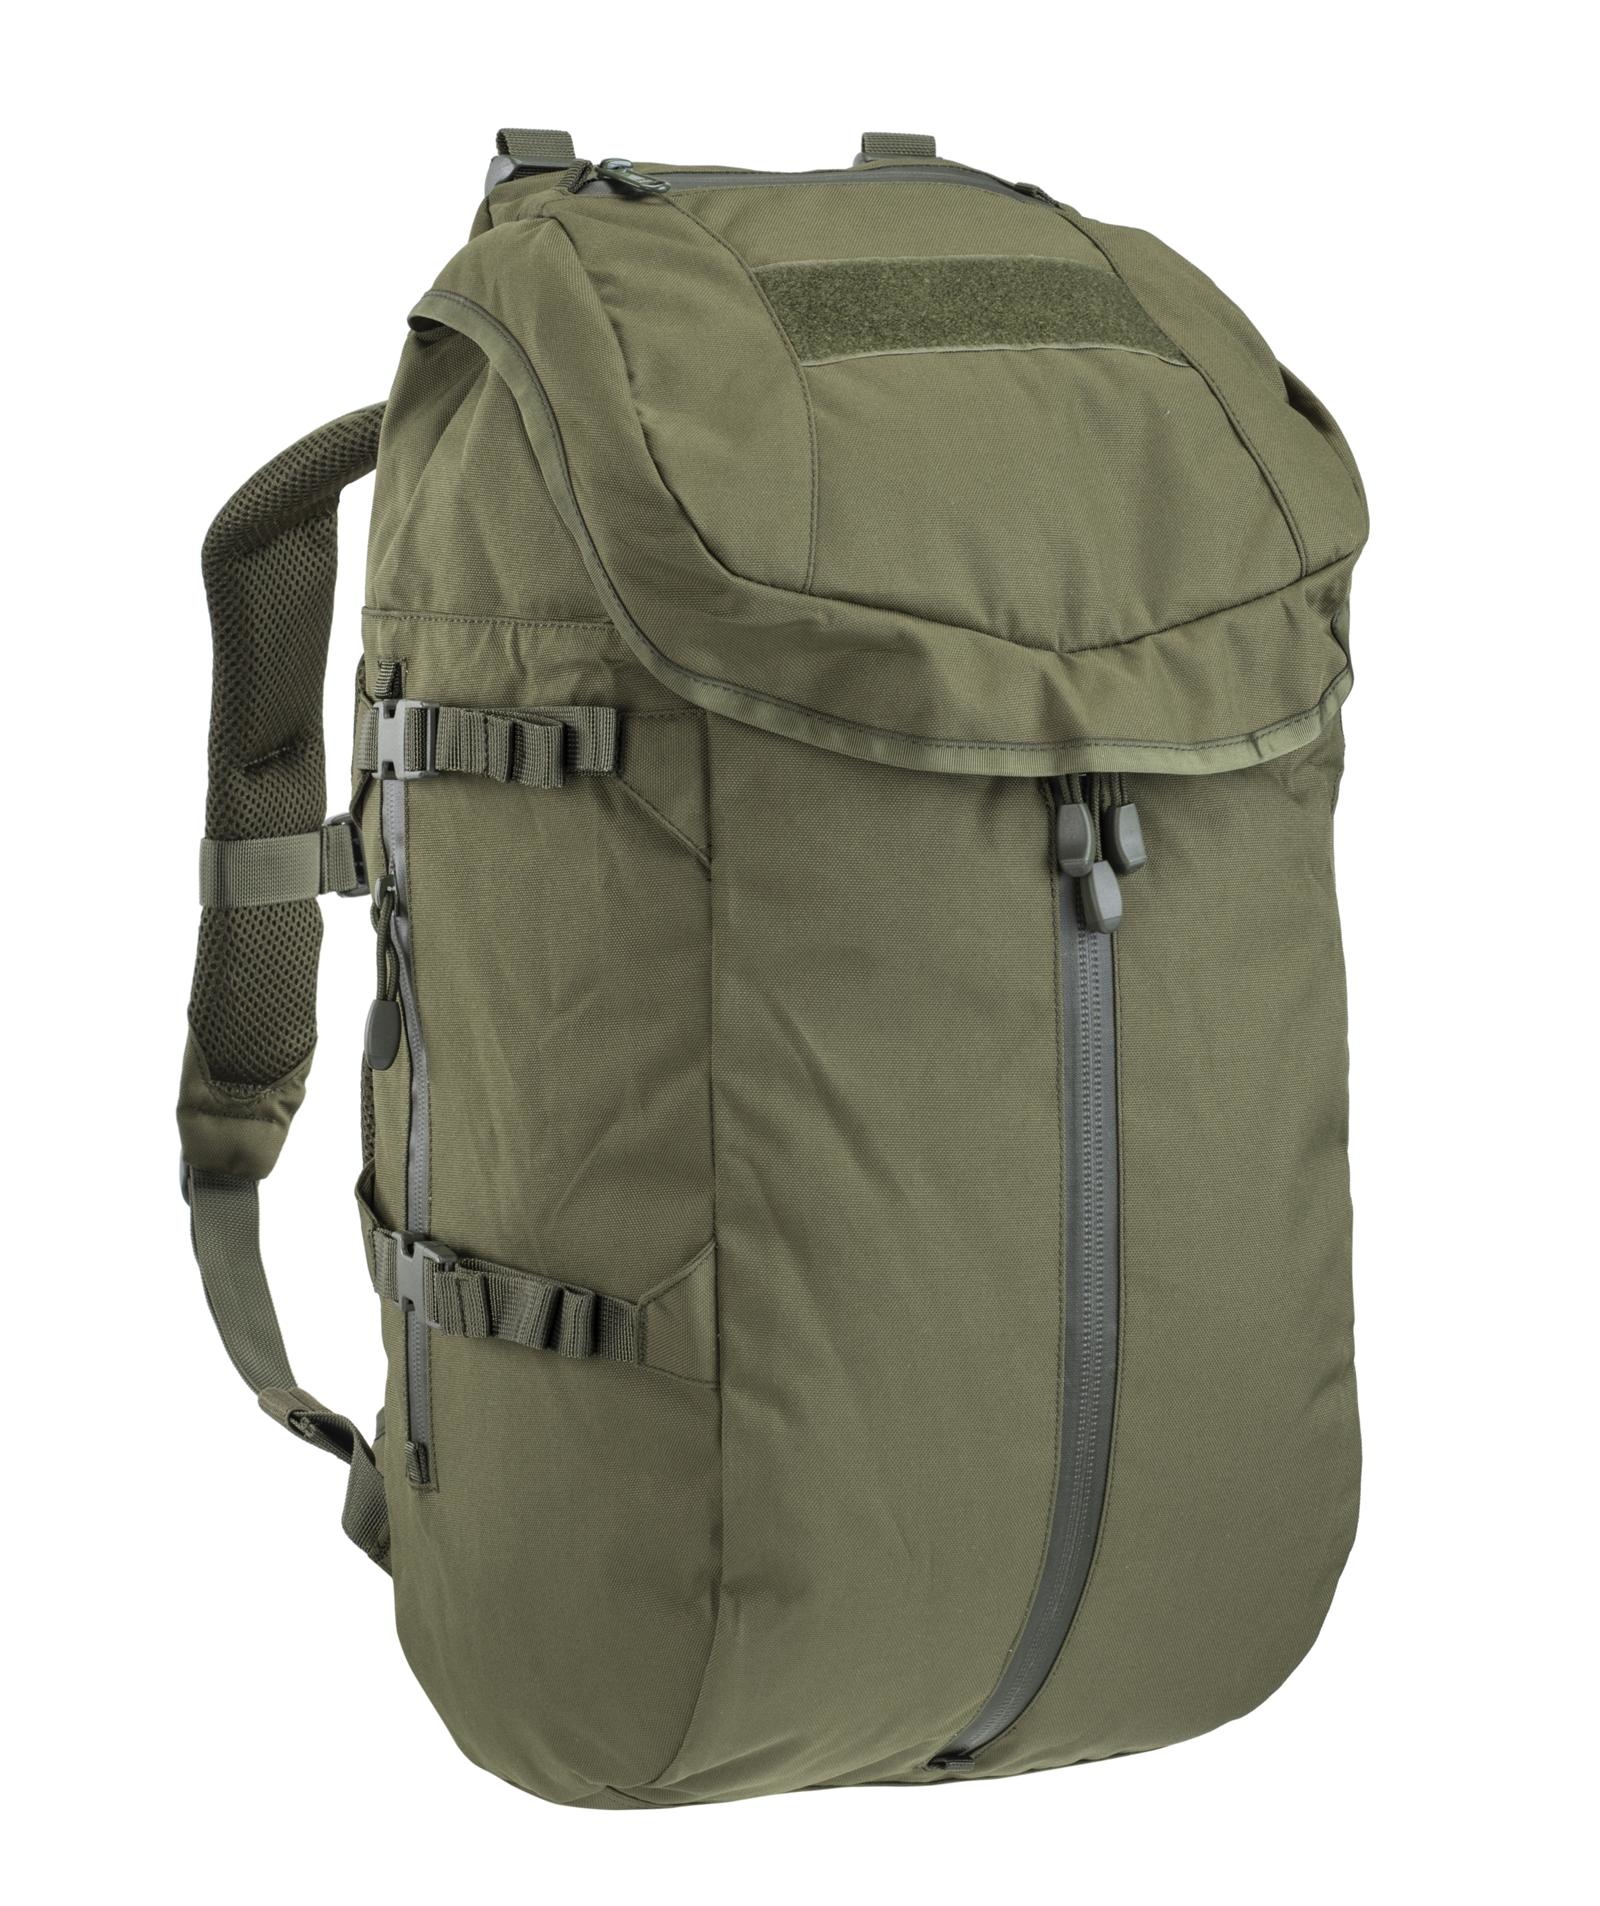 Defcon 5 Bushcraft backpack 600D Poly